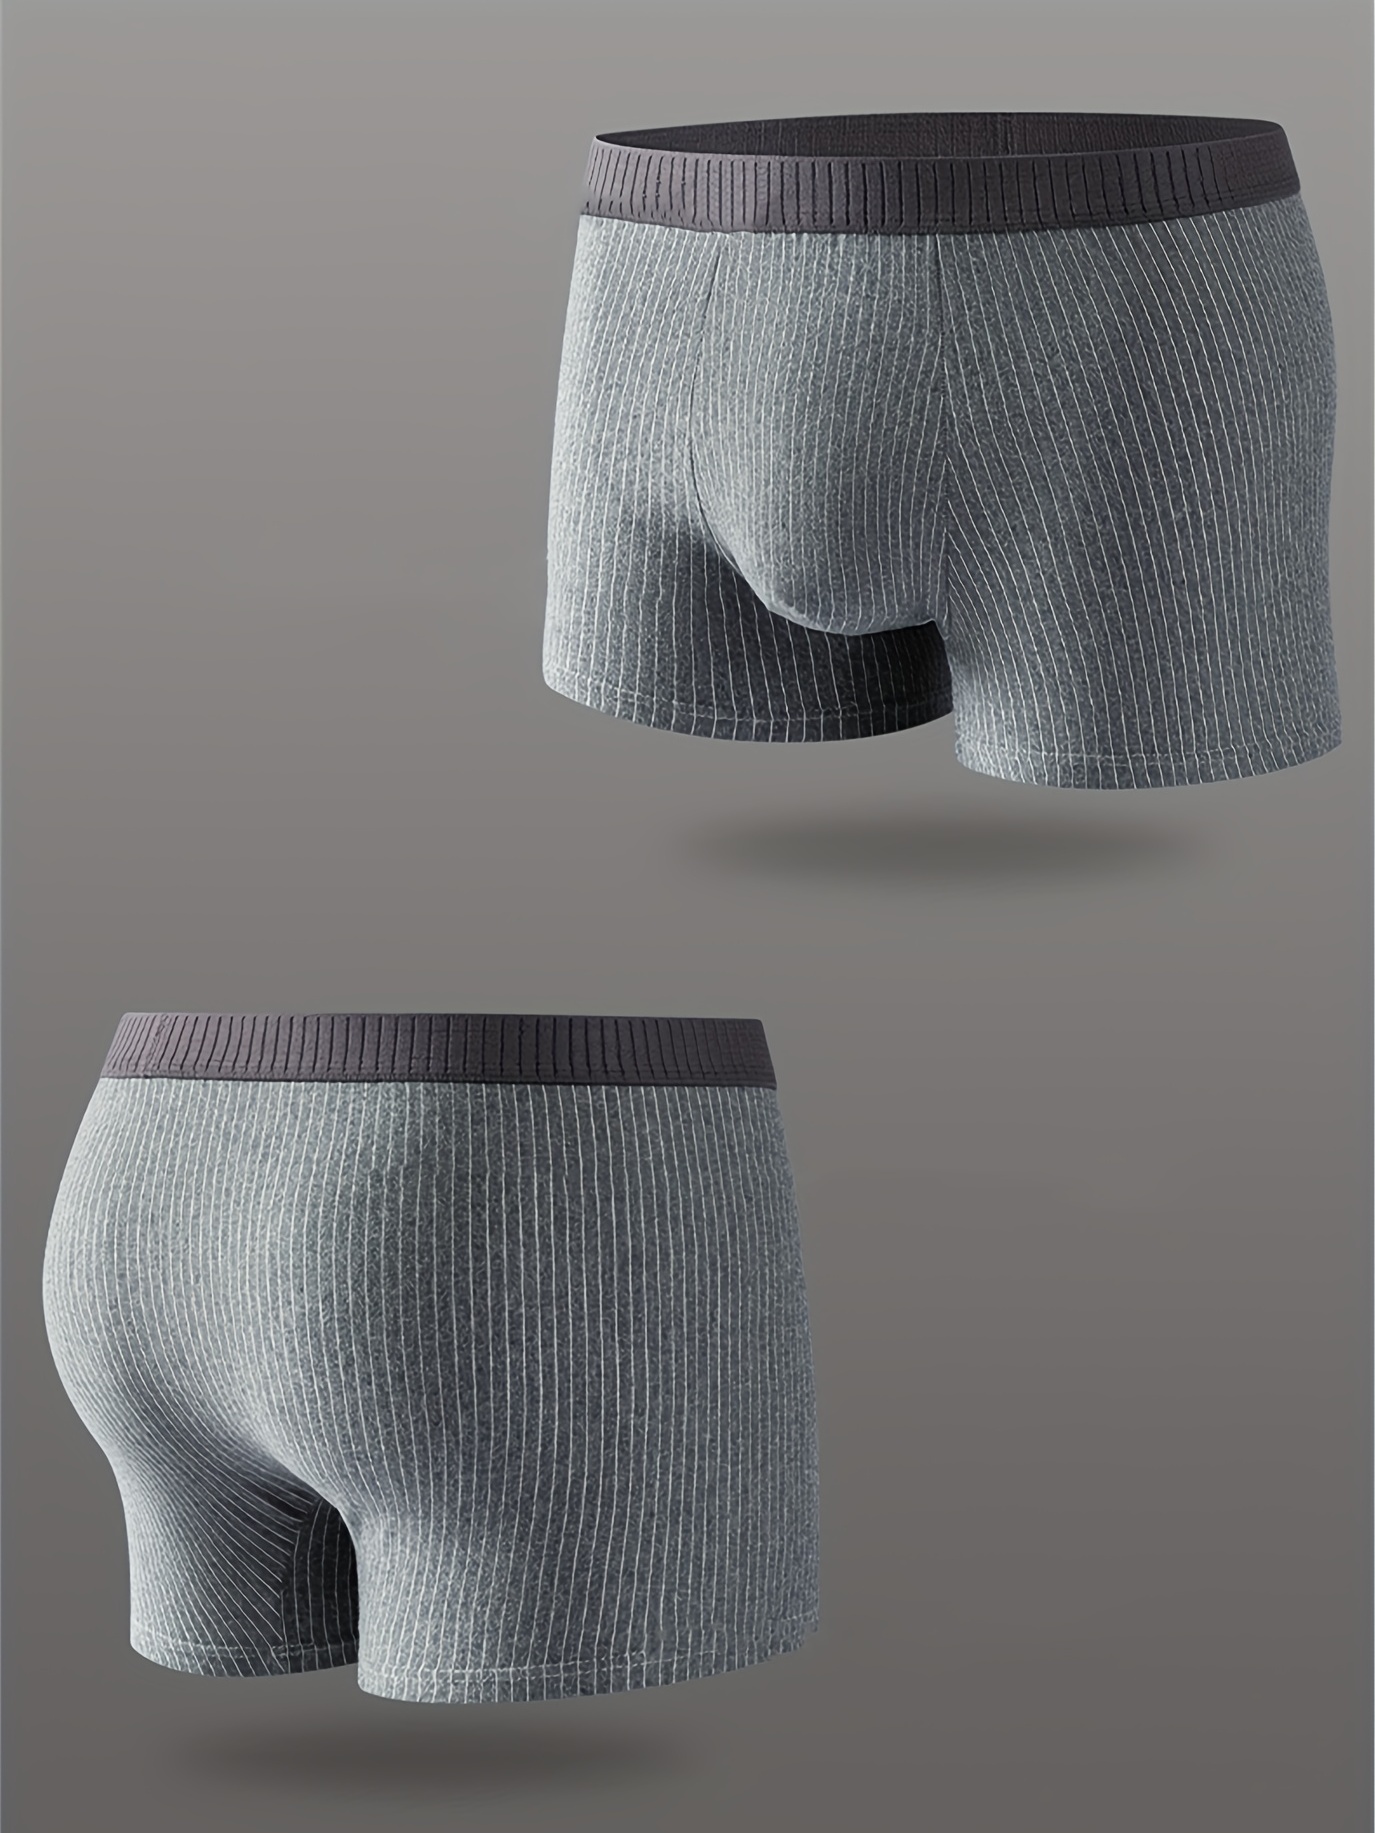 Uniqlo Airism Boxer Brief, Men's Fashion, Bottoms, Underwear on